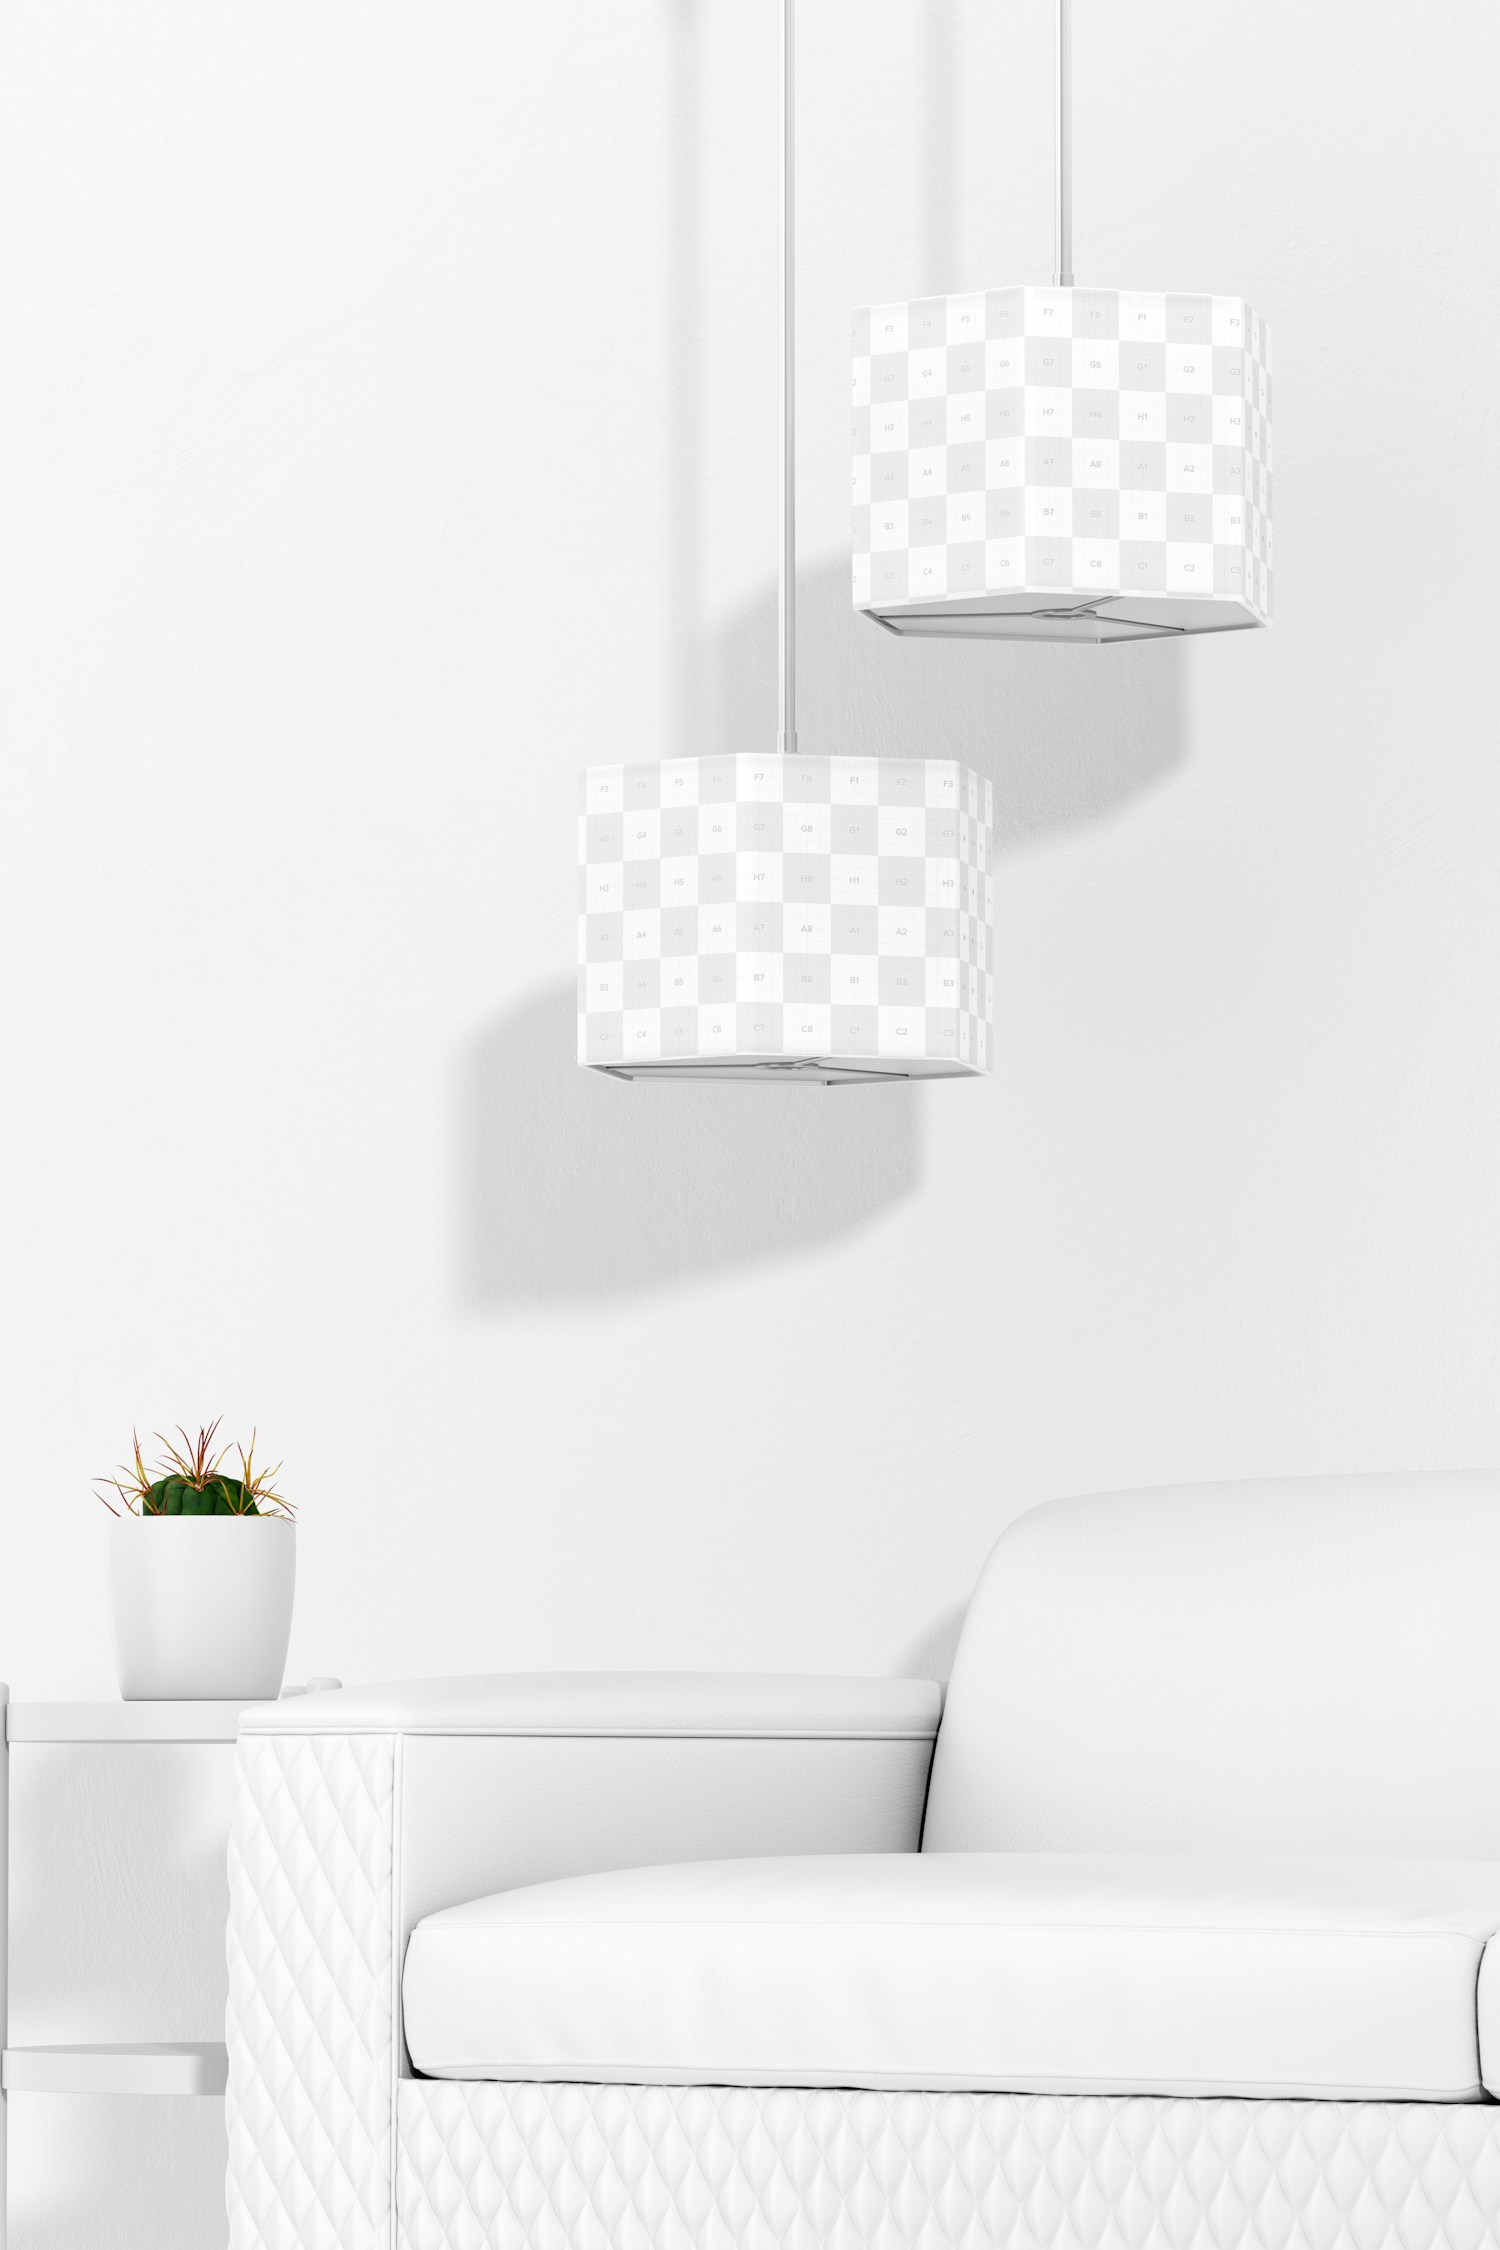 Hexagonal Pendant Lamps Mockup, with Sofa